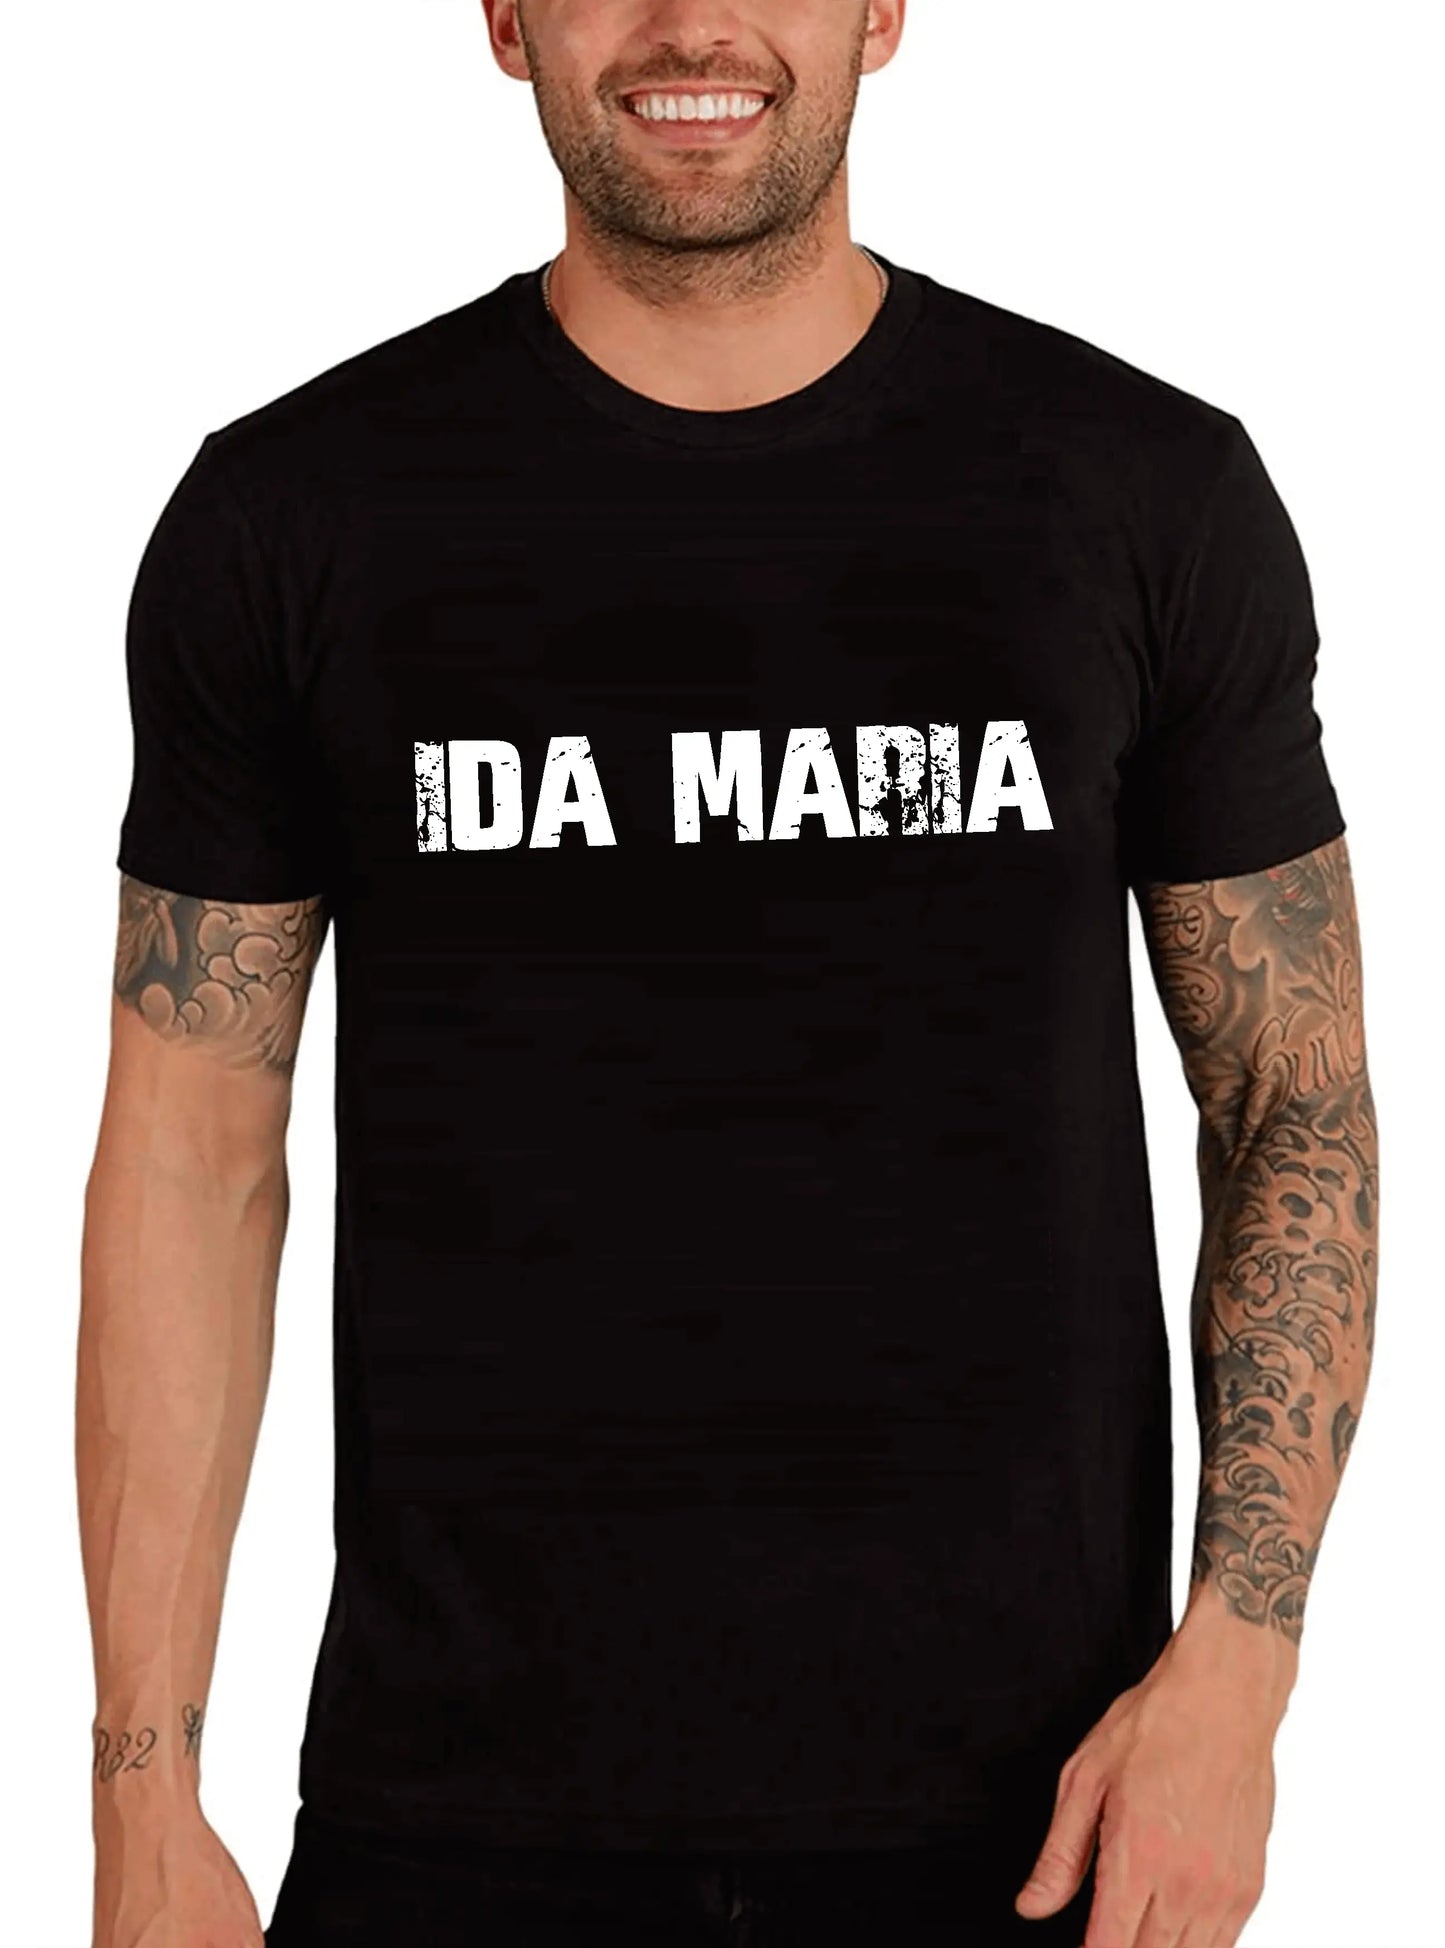 Men's Graphic T-Shirt Ida Maria Eco-Friendly Limited Edition Short Sleeve Tee-Shirt Vintage Birthday Gift Novelty